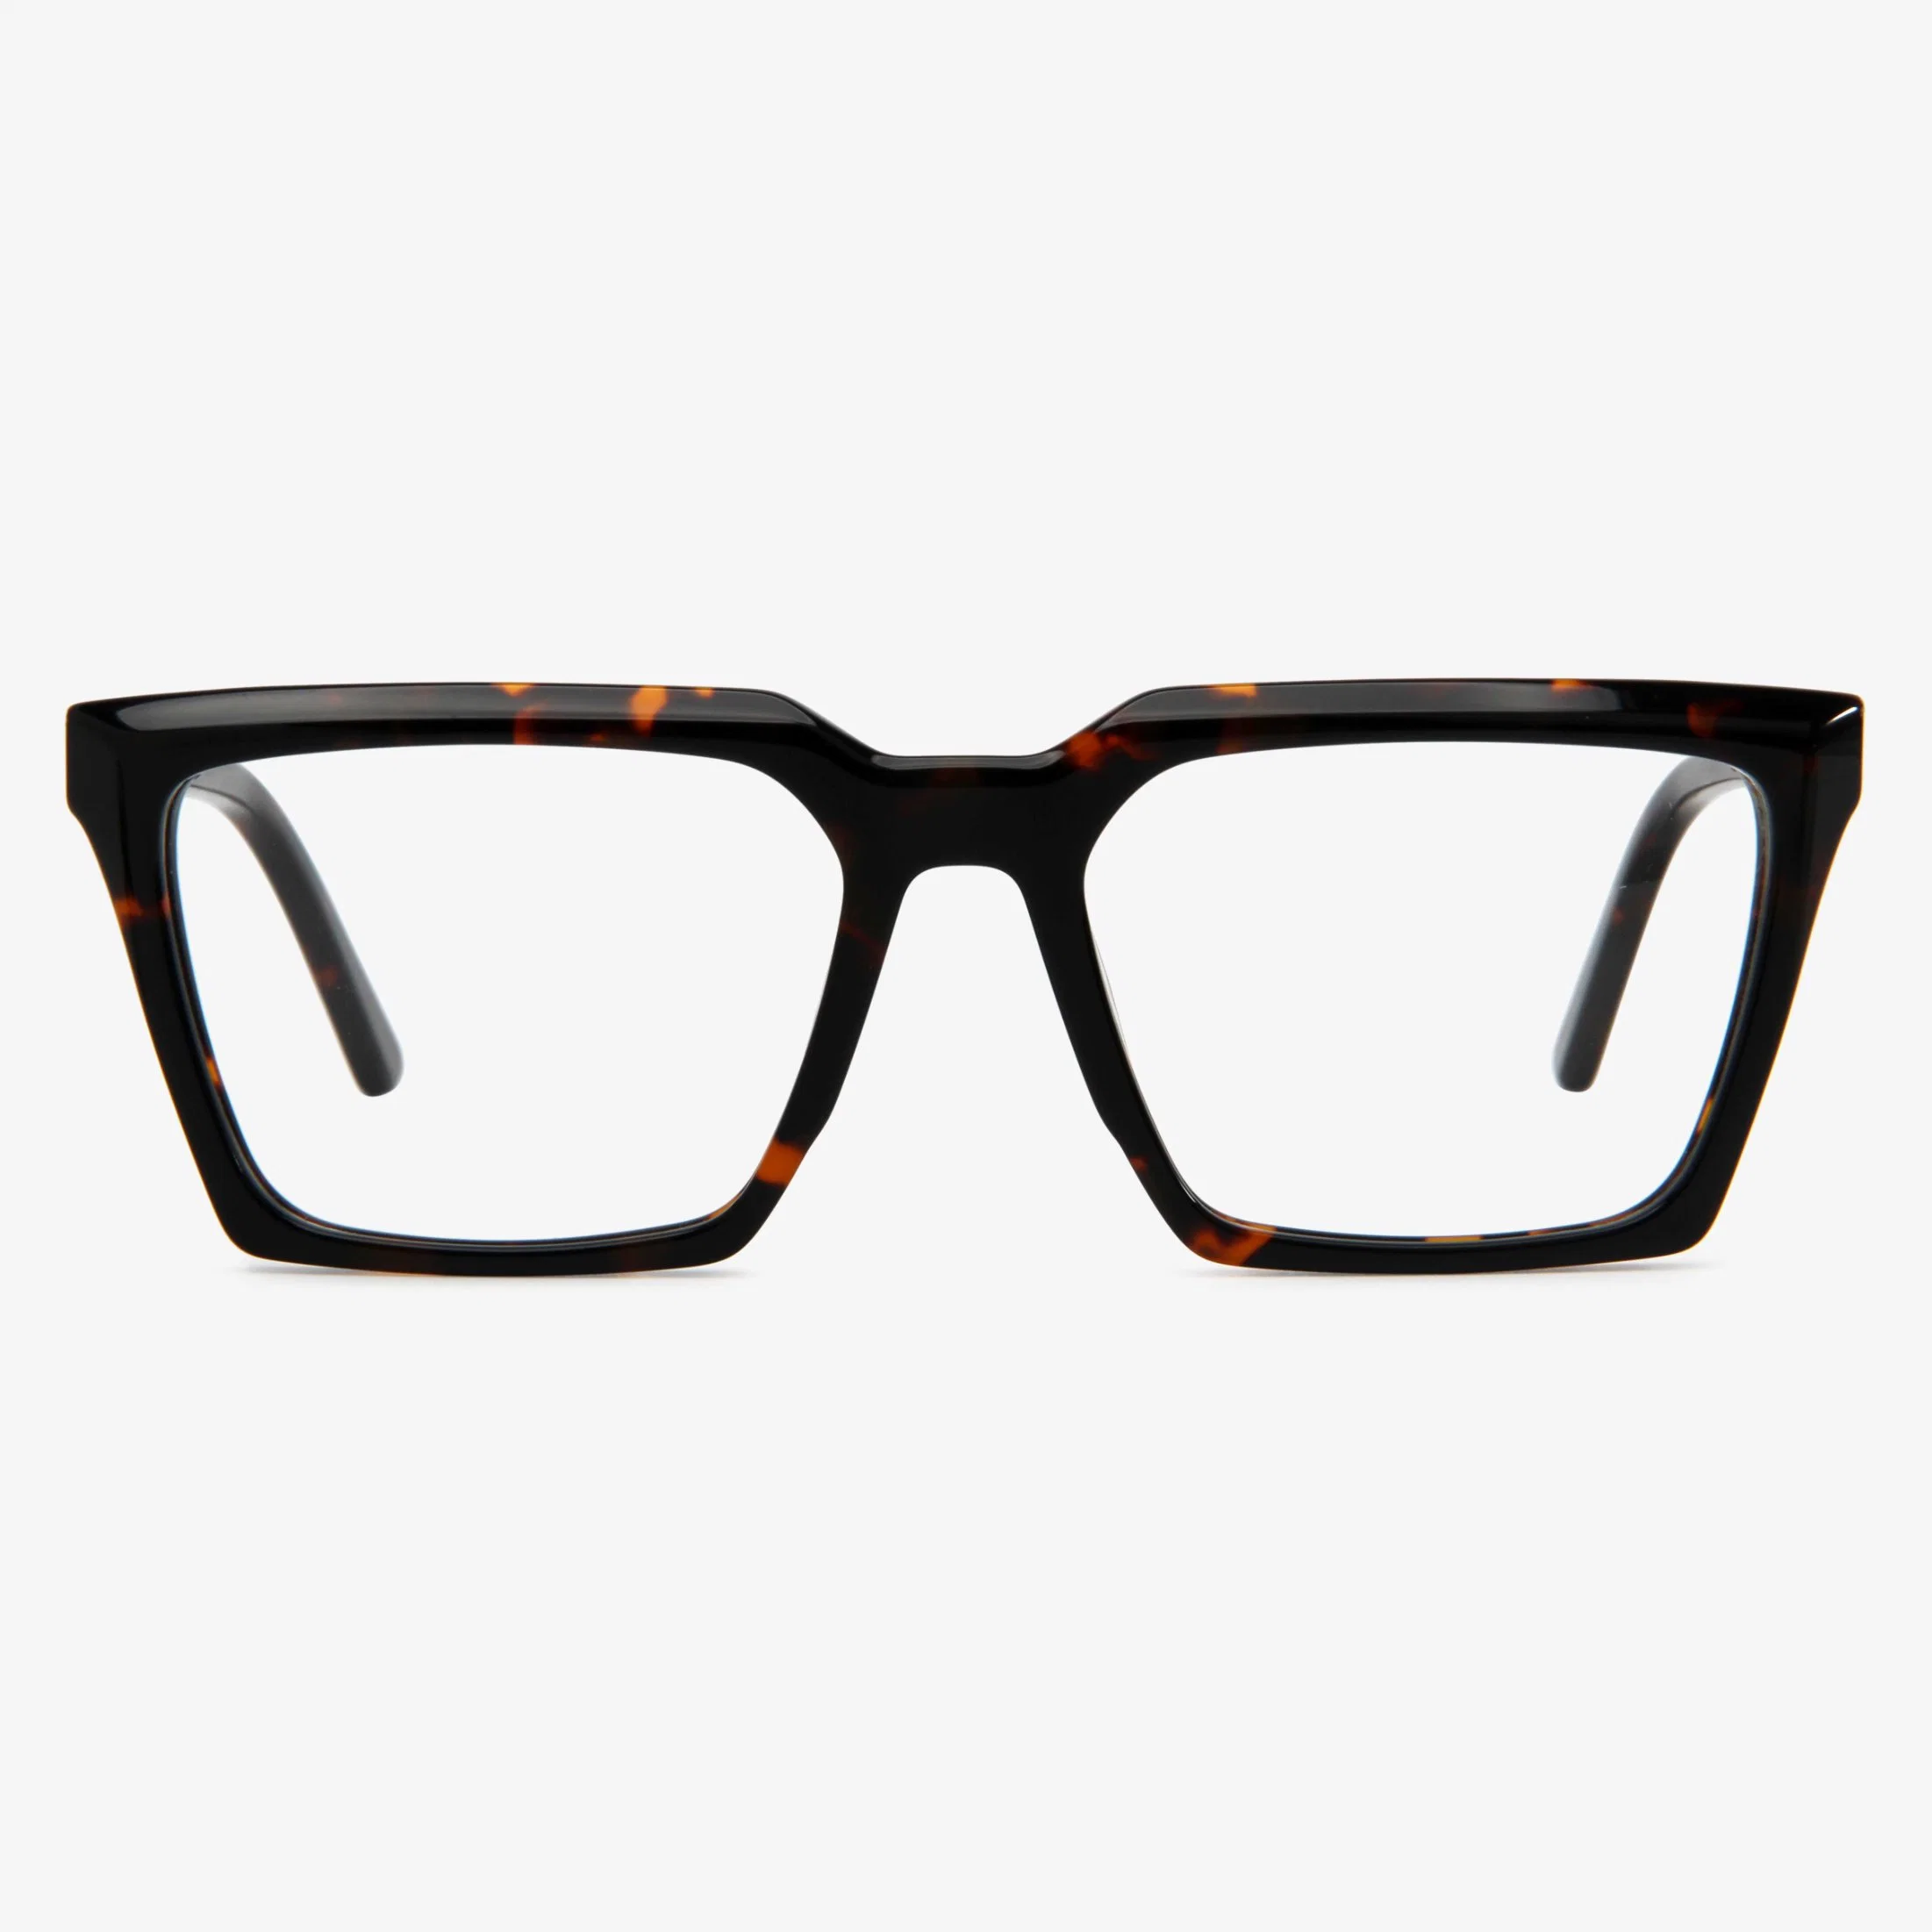 Fashion Slim Square Shape Acetate Eyeglasses Optical Frame for Woman Men